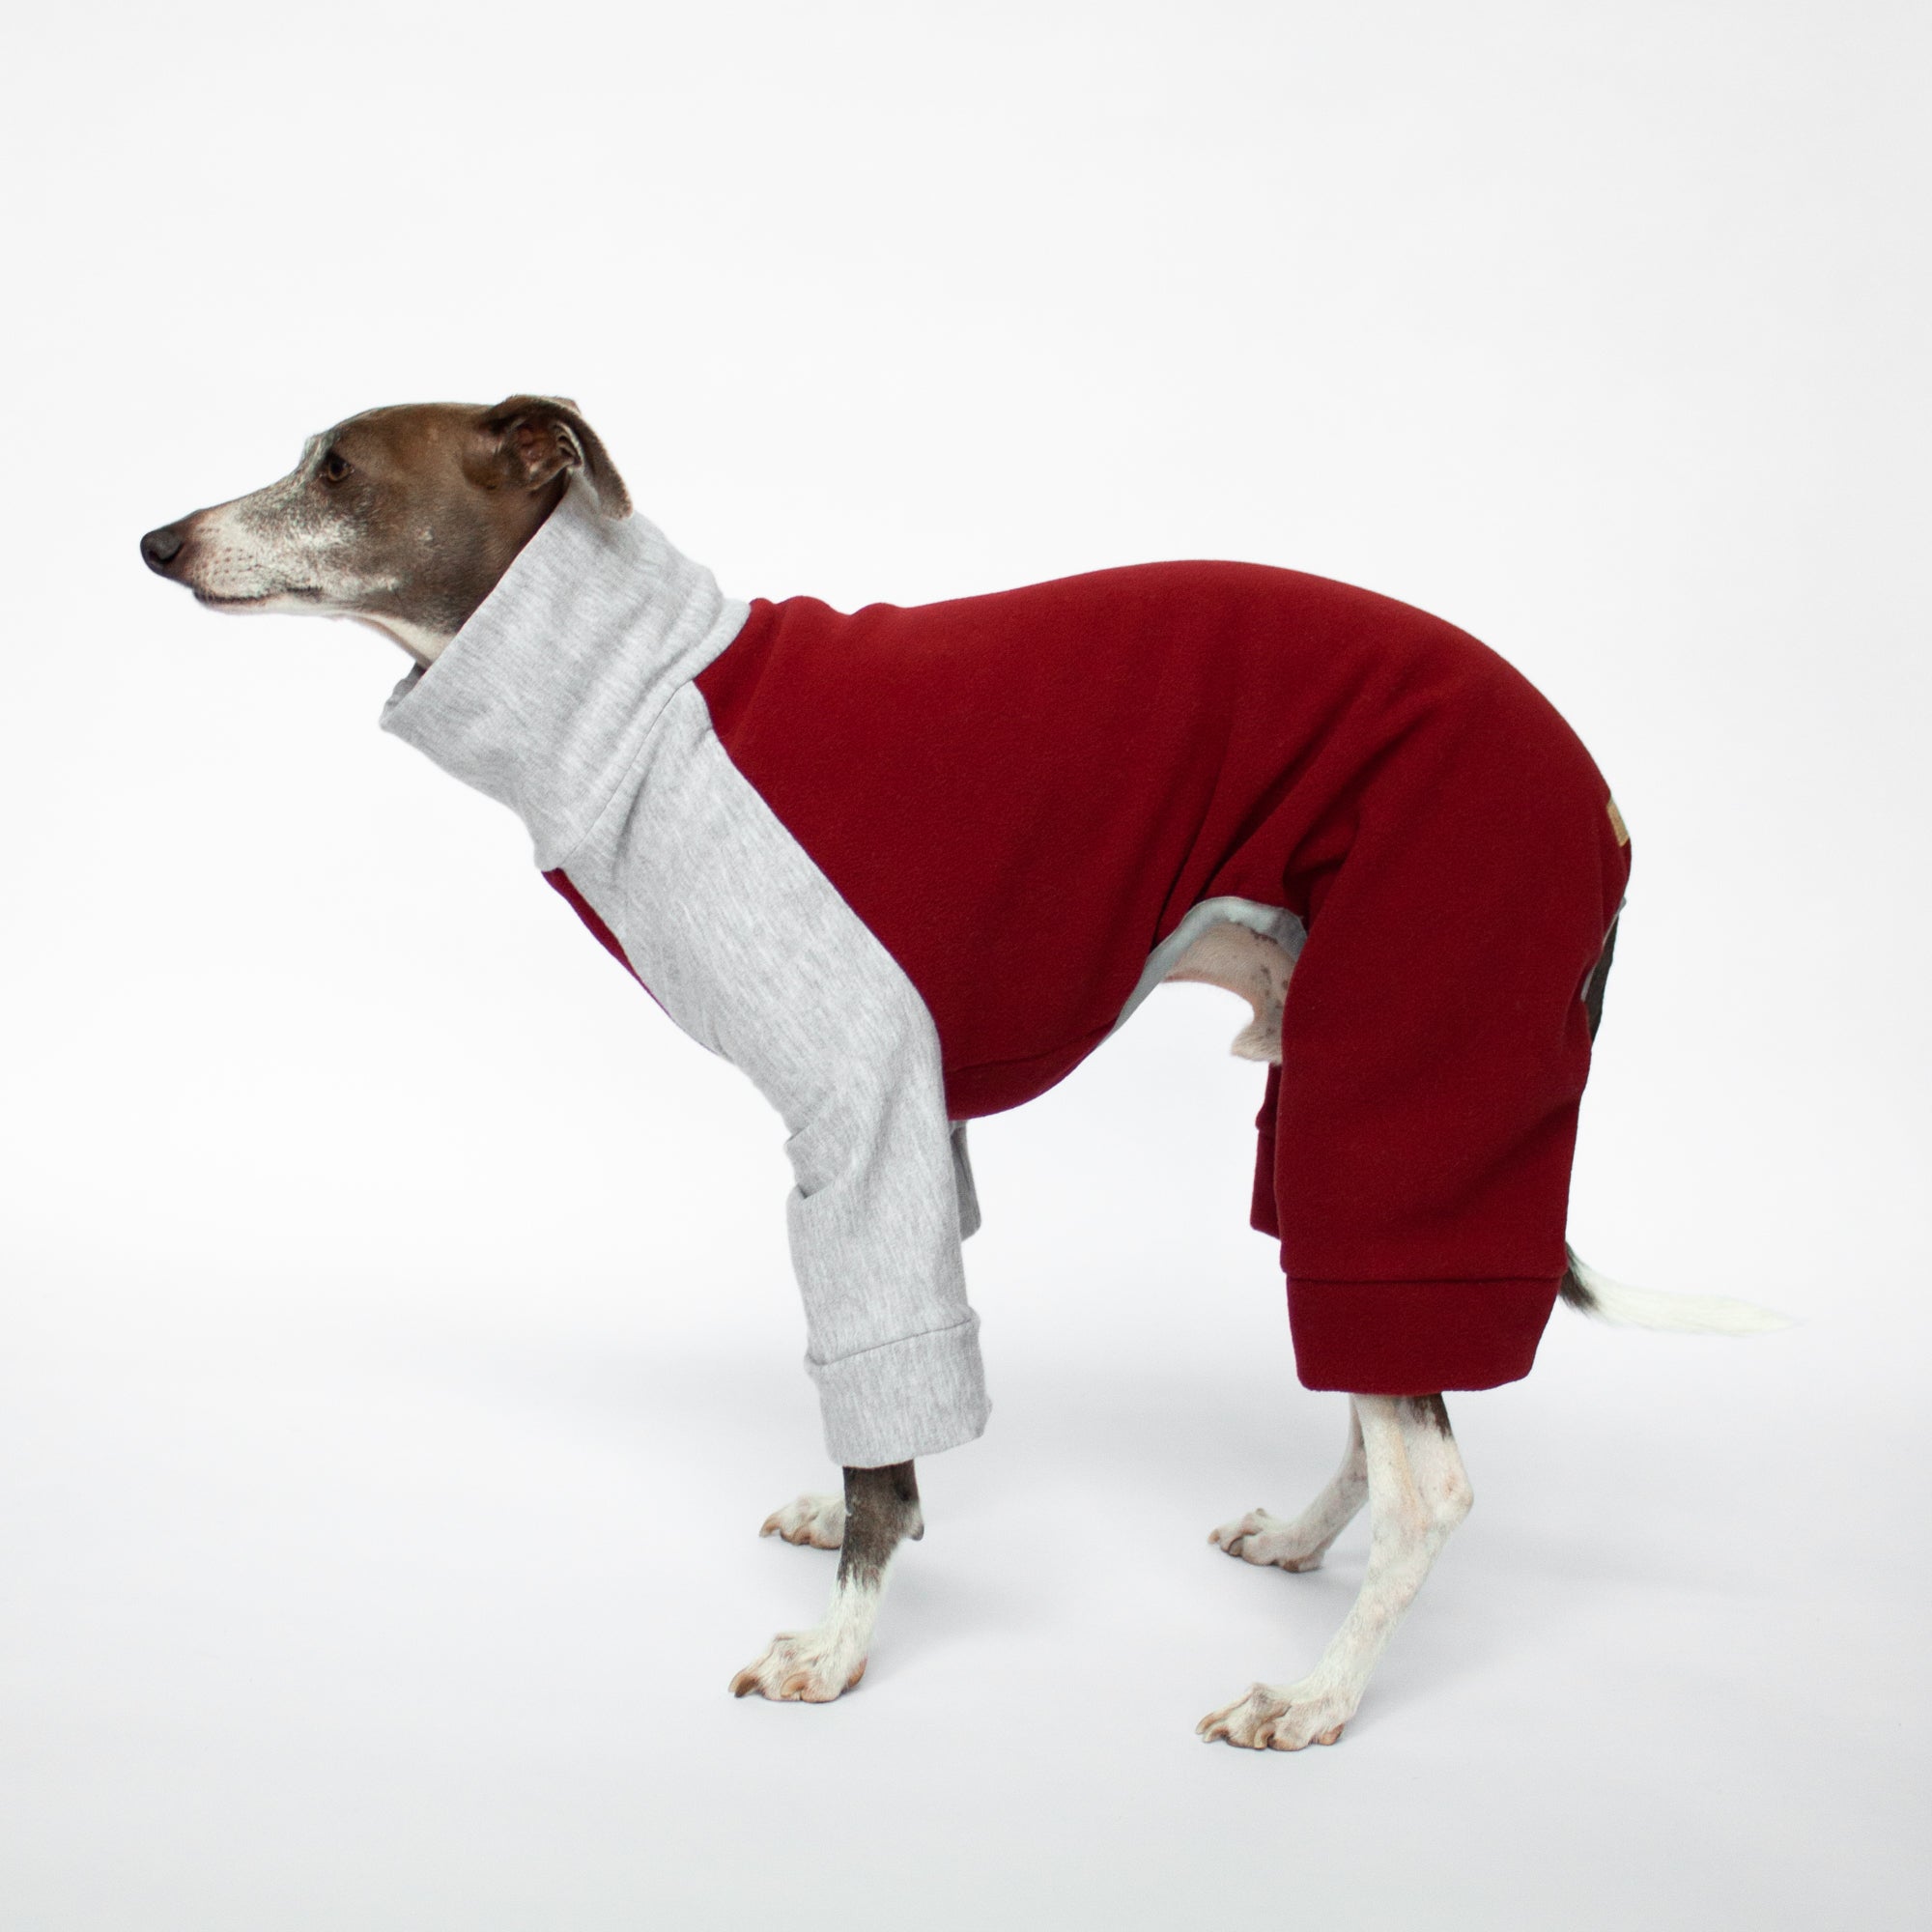 italian greyhound dog wearing red and grey onesie